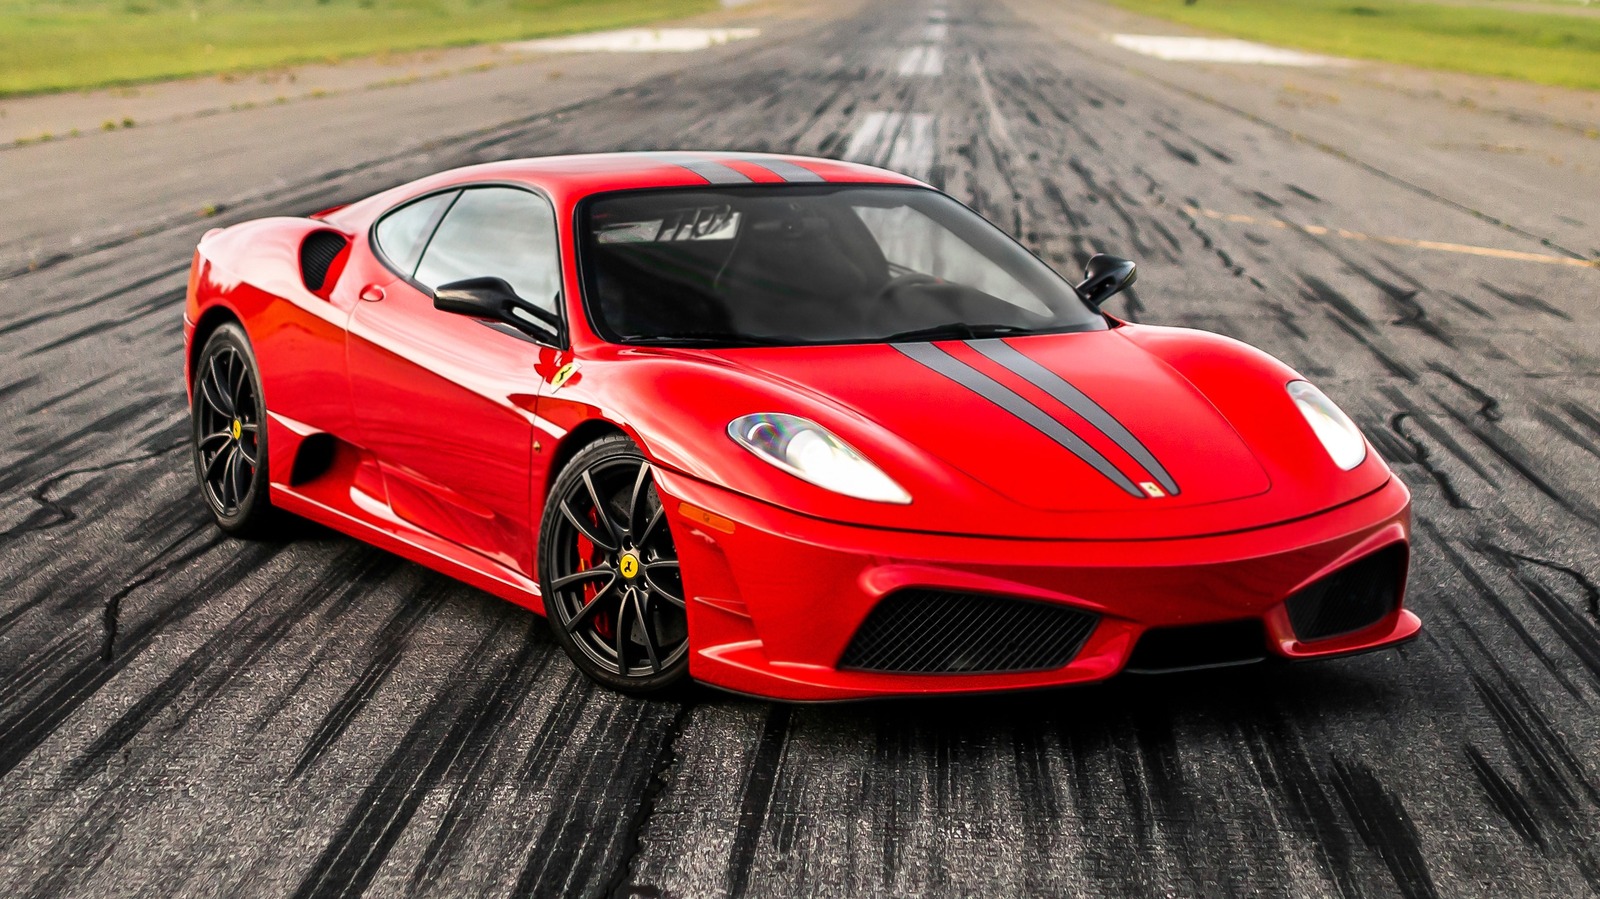 Why is Ferrari restricting Ferrari owners personalizing their car